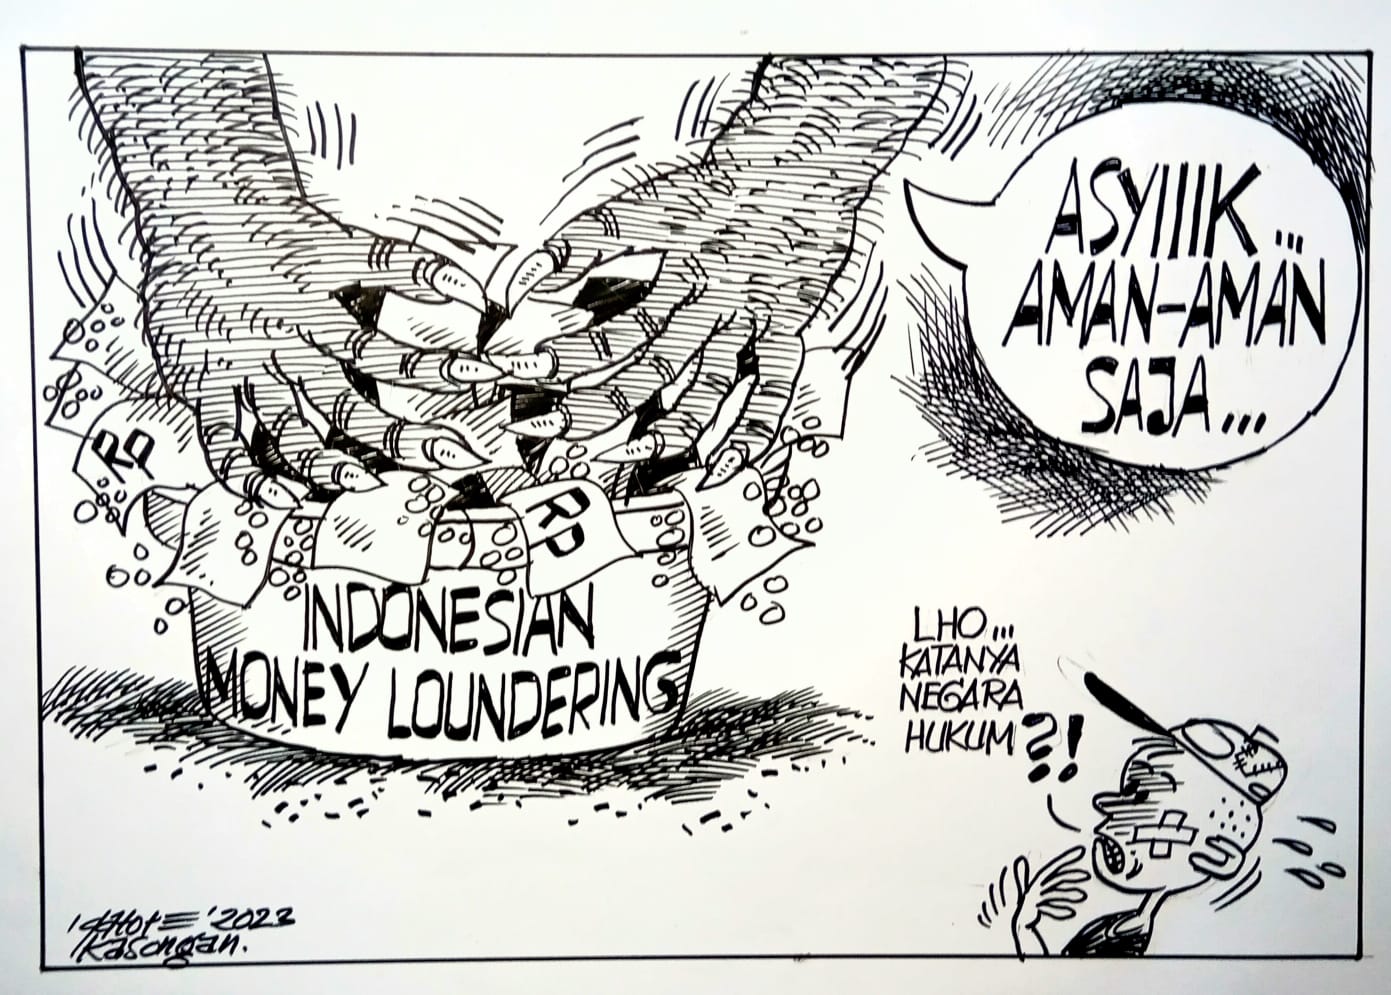 Indonesian Money Laundering: Asyiiik,,, Aman-aman 